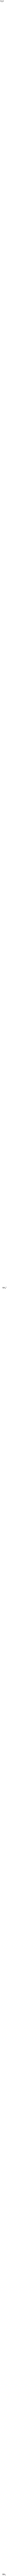 Ammonium borate ((NH4)2B4O7)